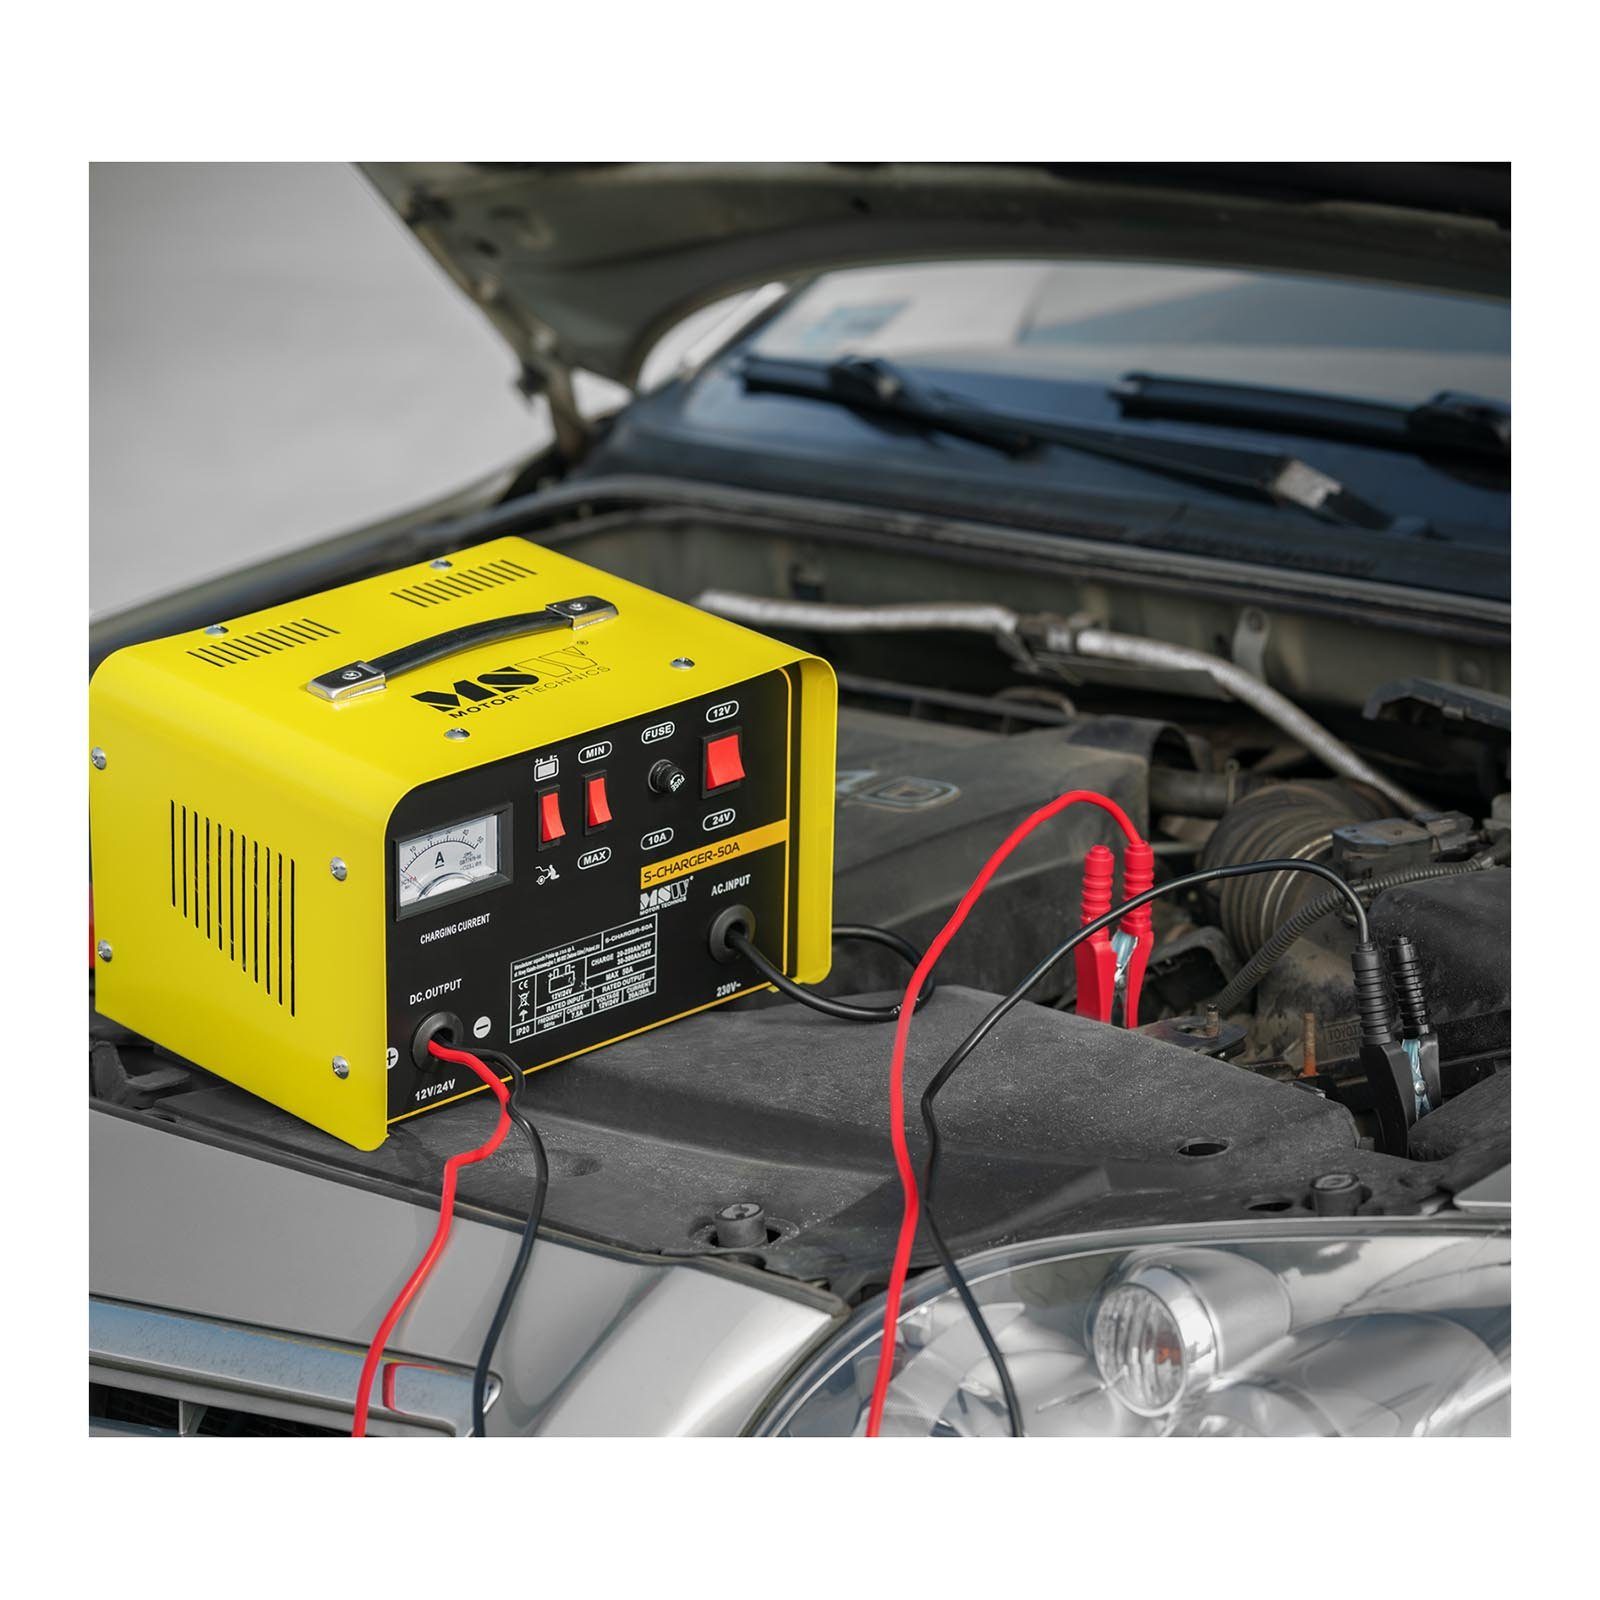 MSW Autobatterie Ladegerät 12V Kfz Starthilfe Ladegerät Autobatterie-Ladegerät 24 12 Pkw Batterie